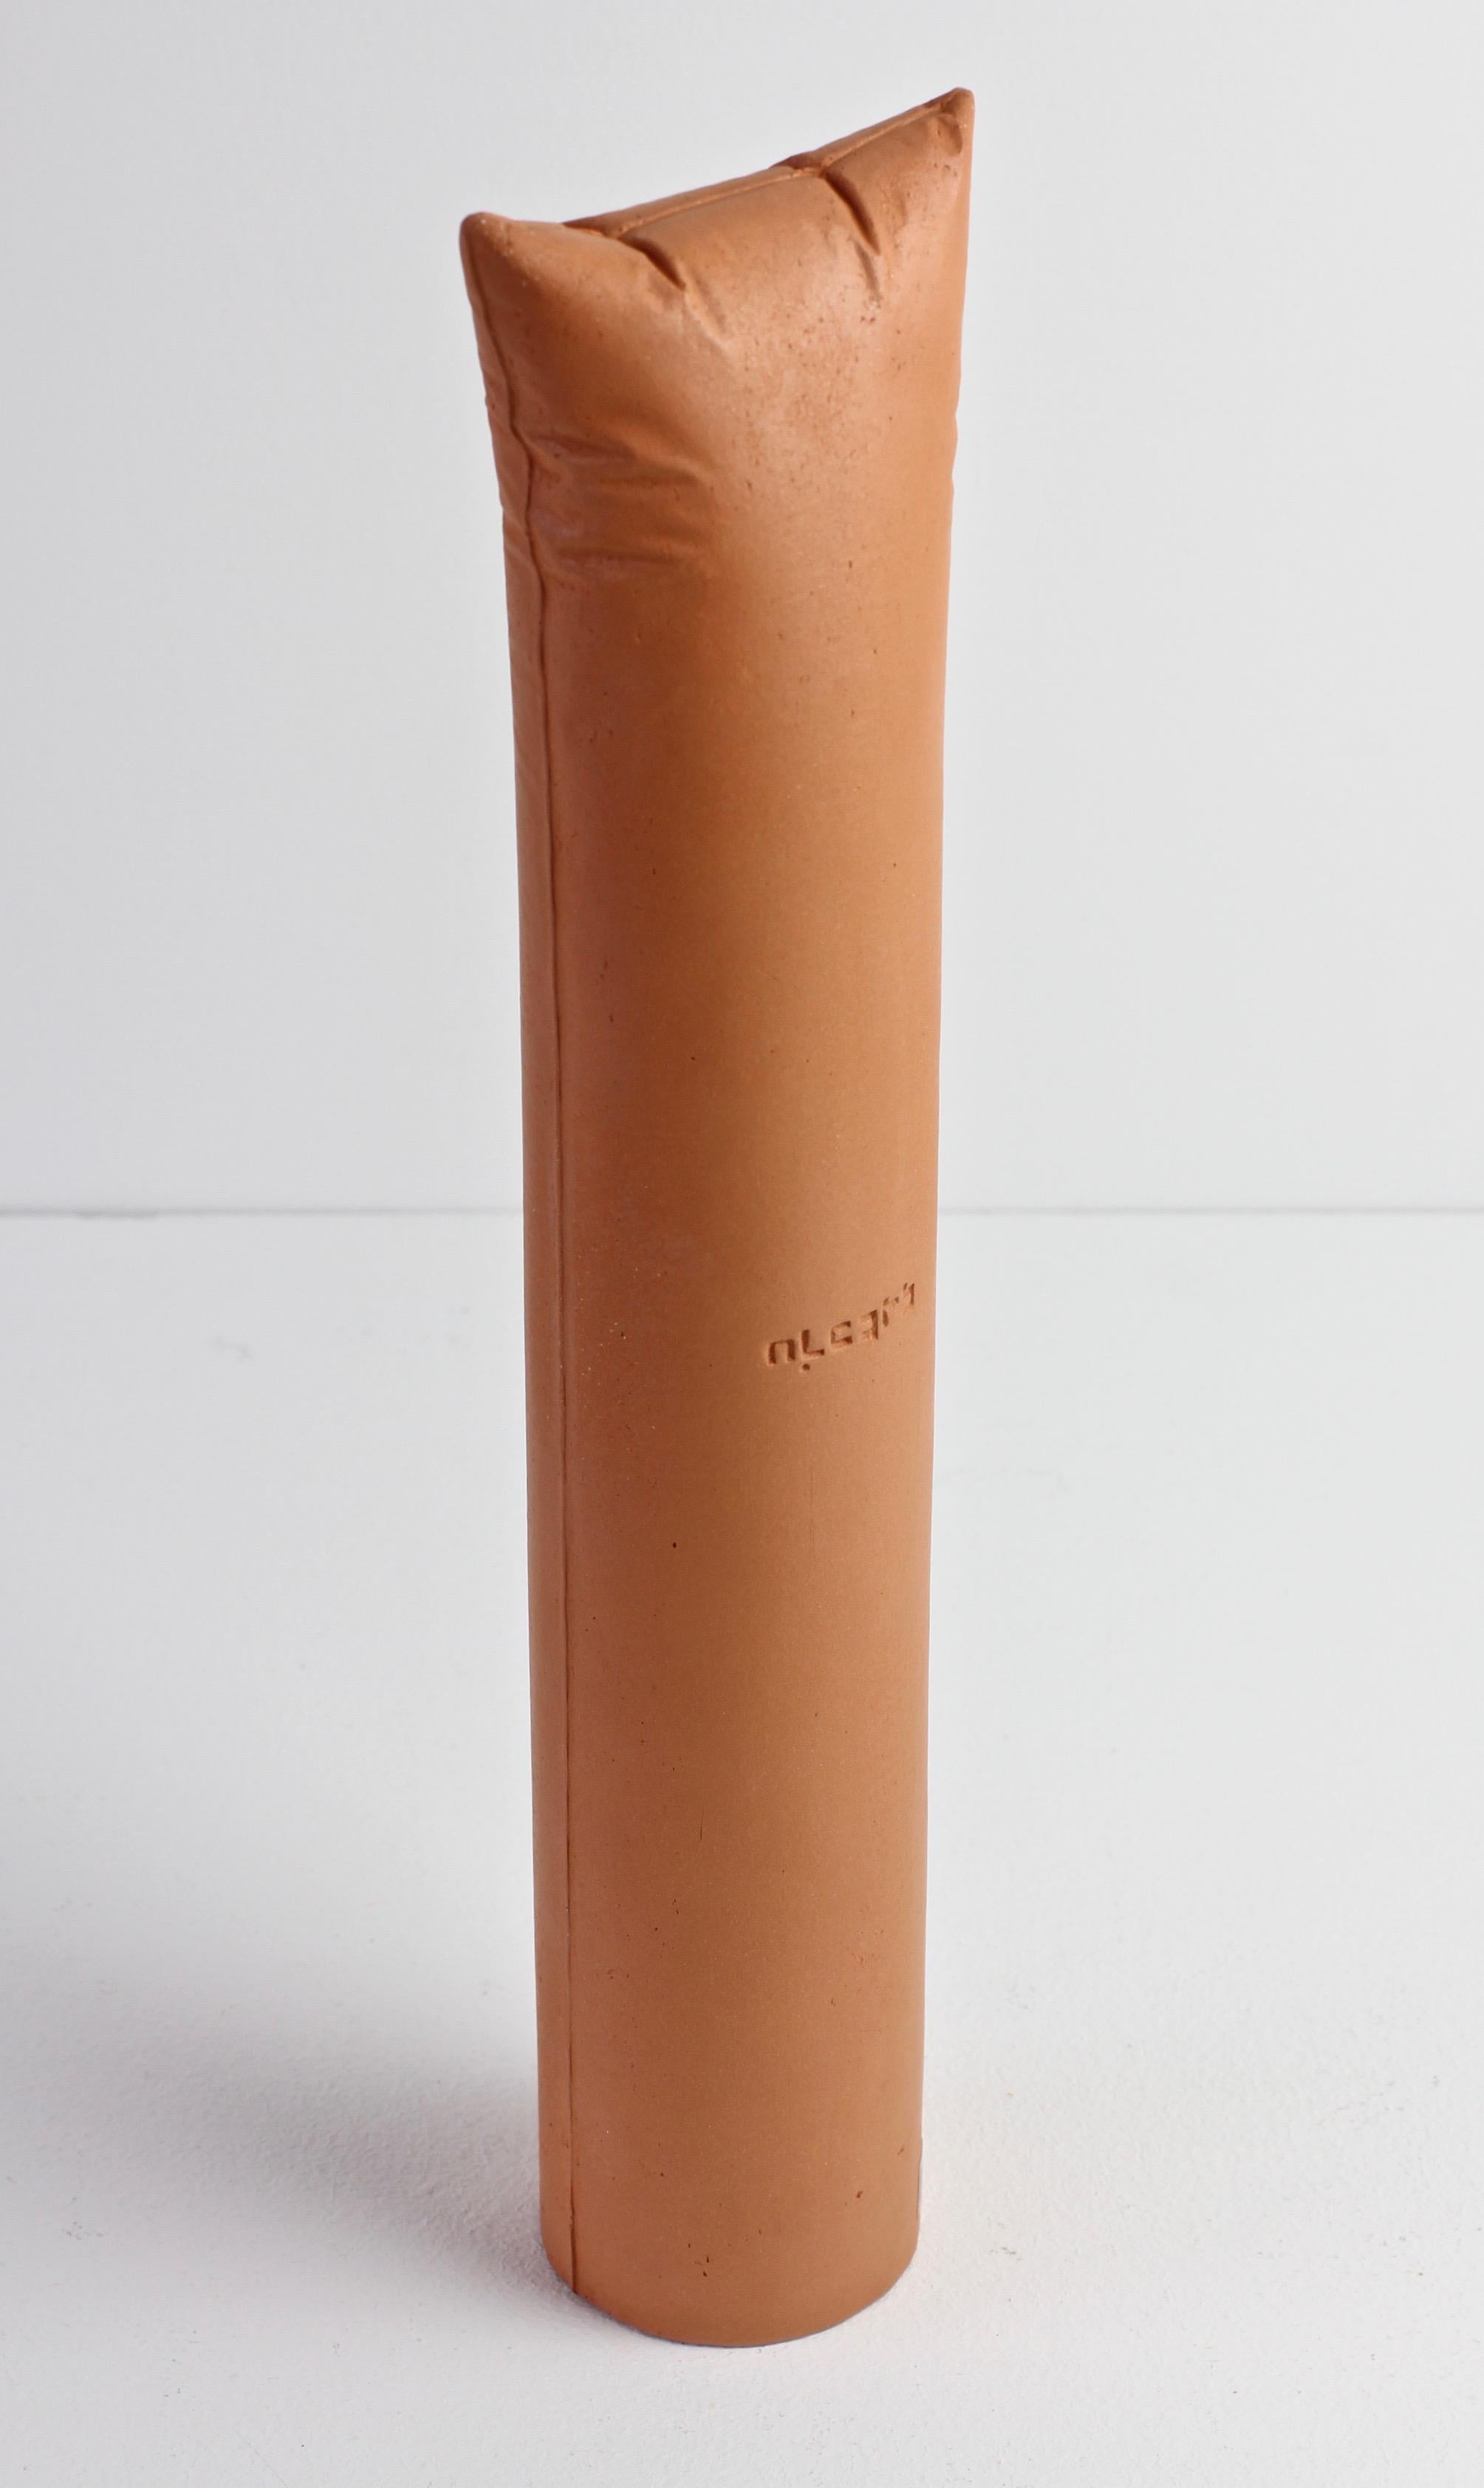 Gabriele Puetz Pillow Pillar 'Nichts' Vintage German Art Pottery Sculpture # 5/7 For Sale 1